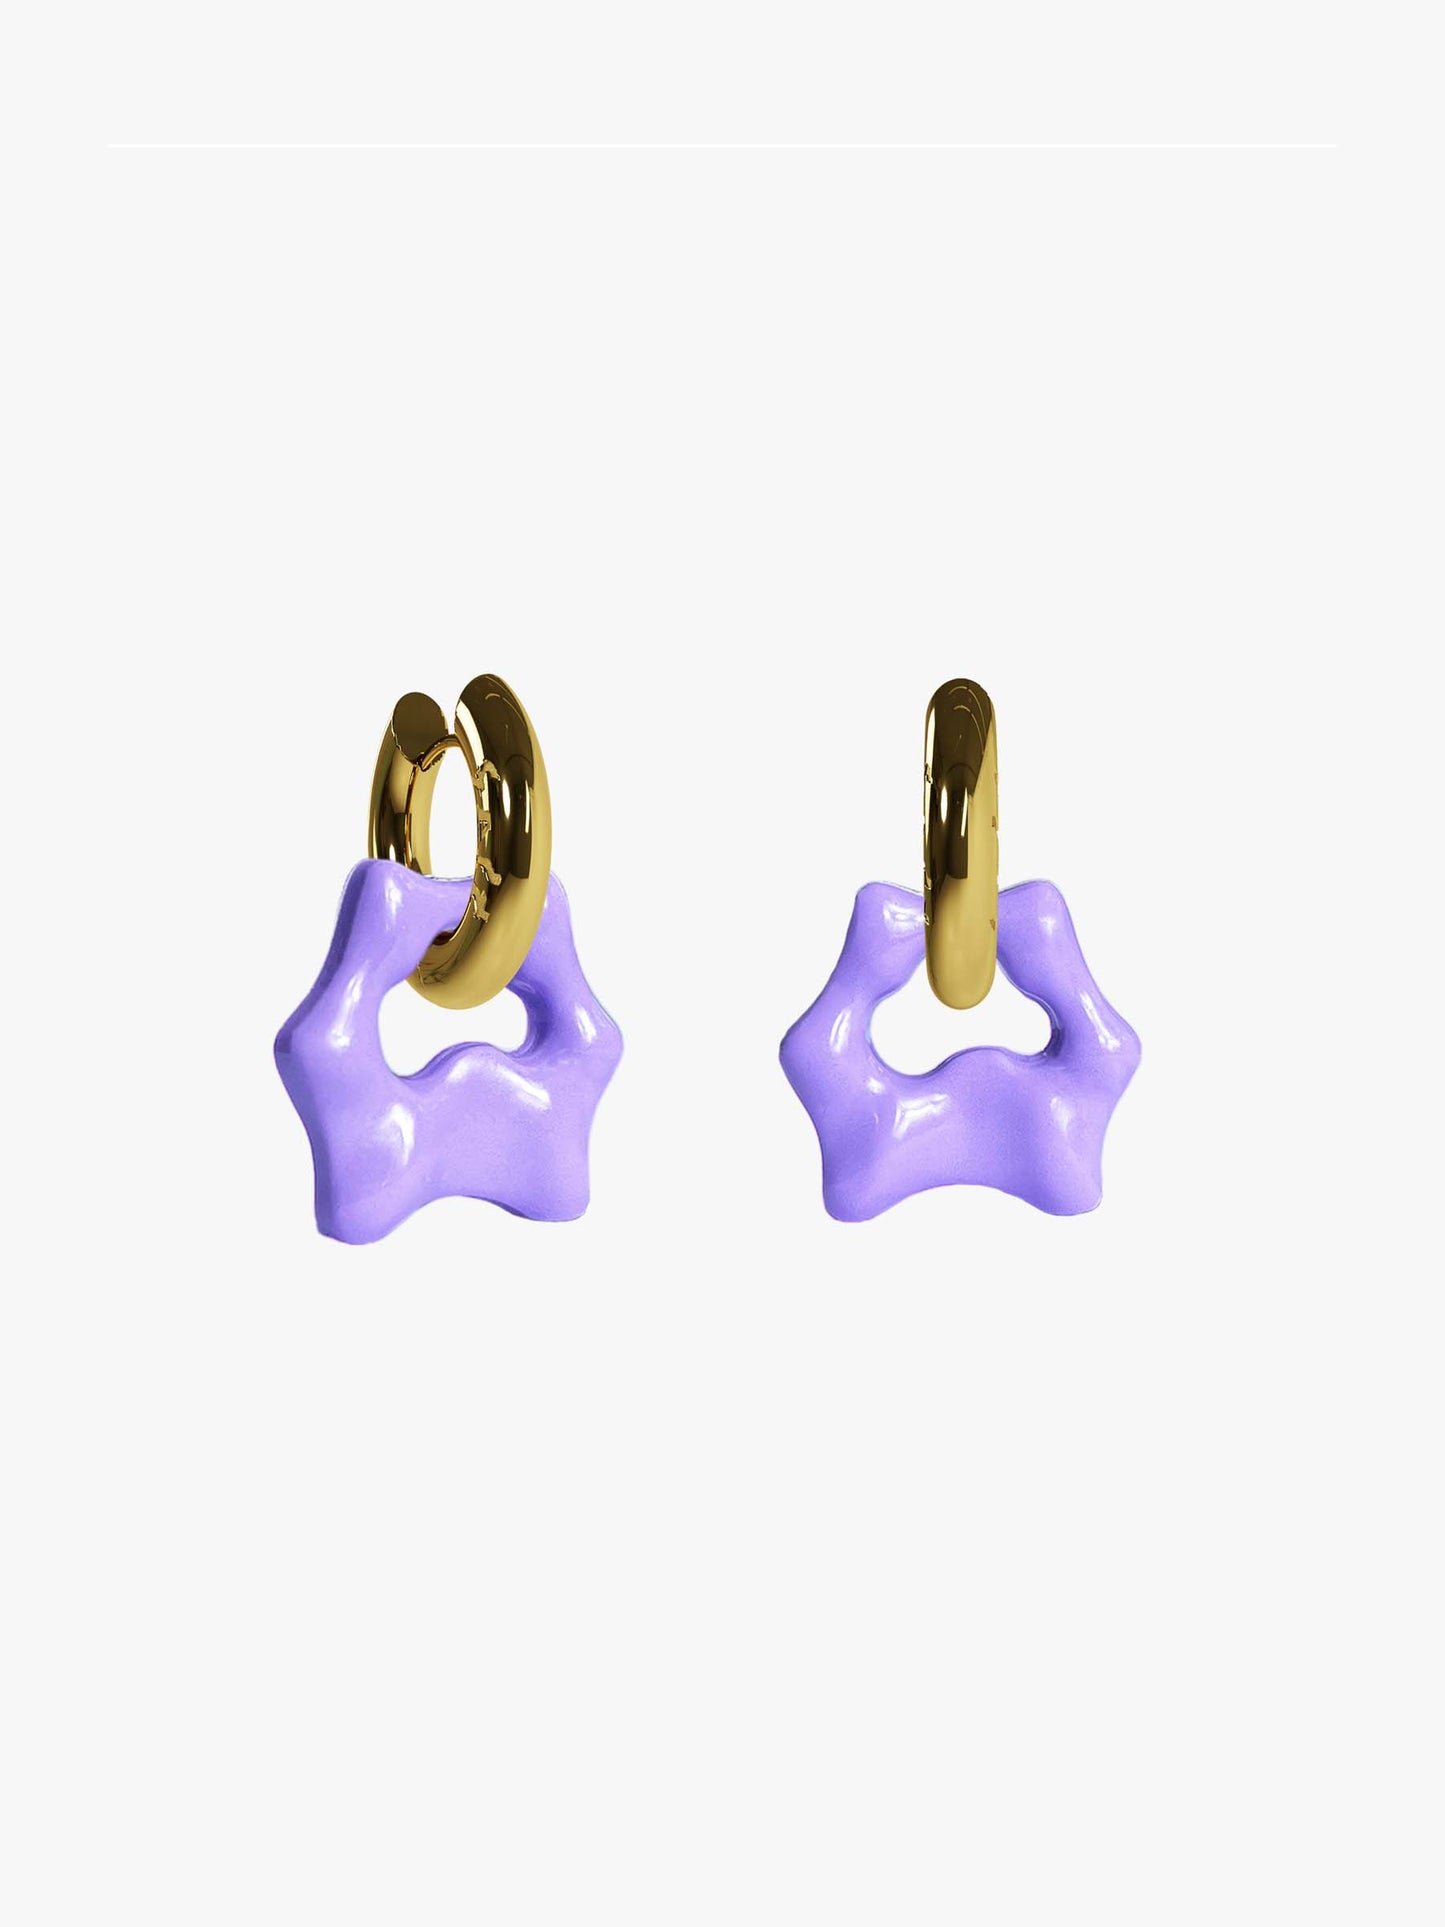 Tab lilac gold earring (pair)